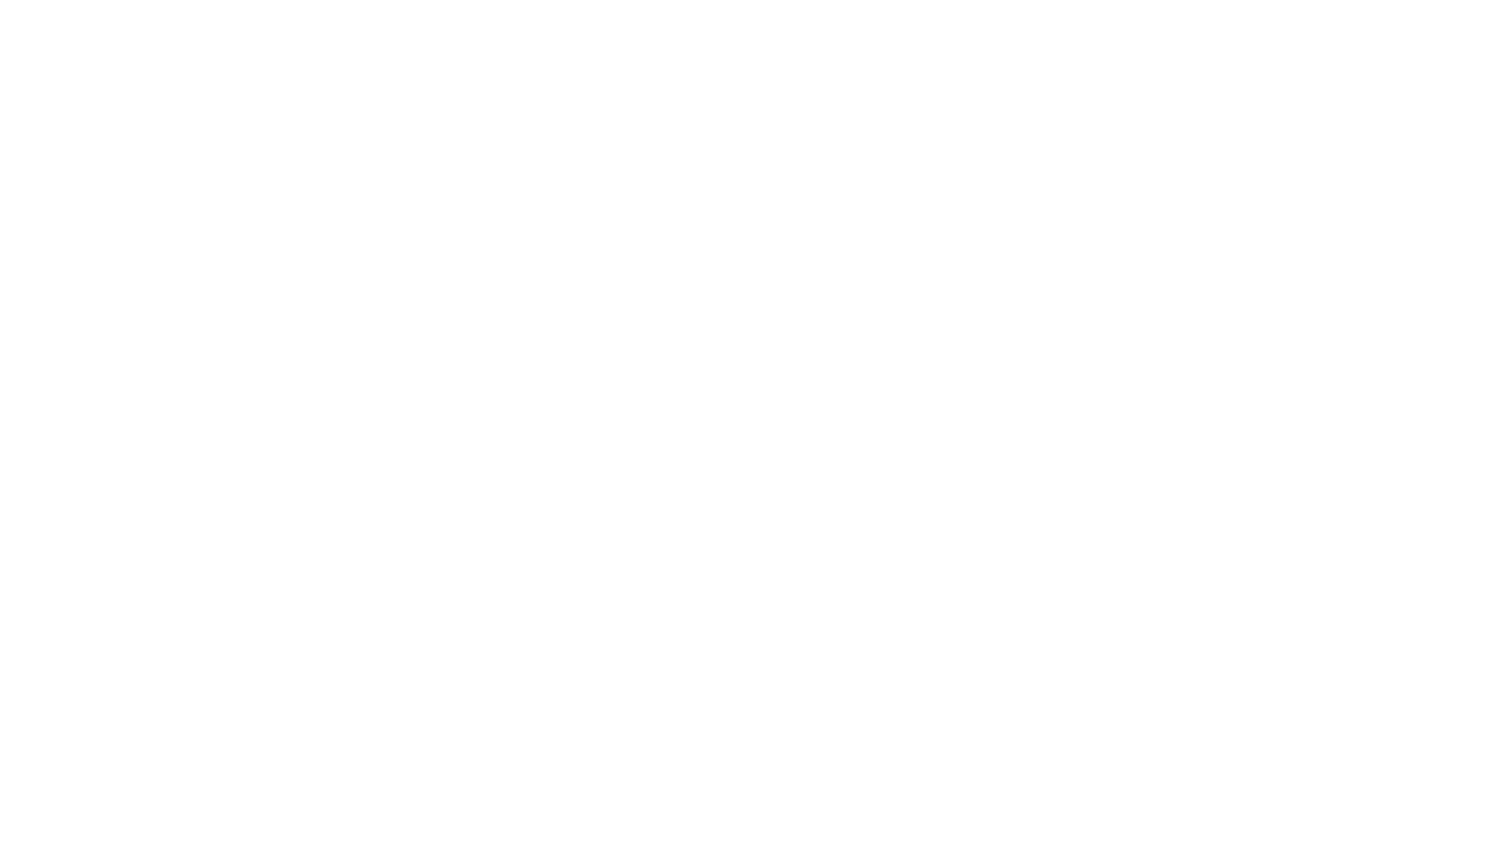 HOF CHURCH